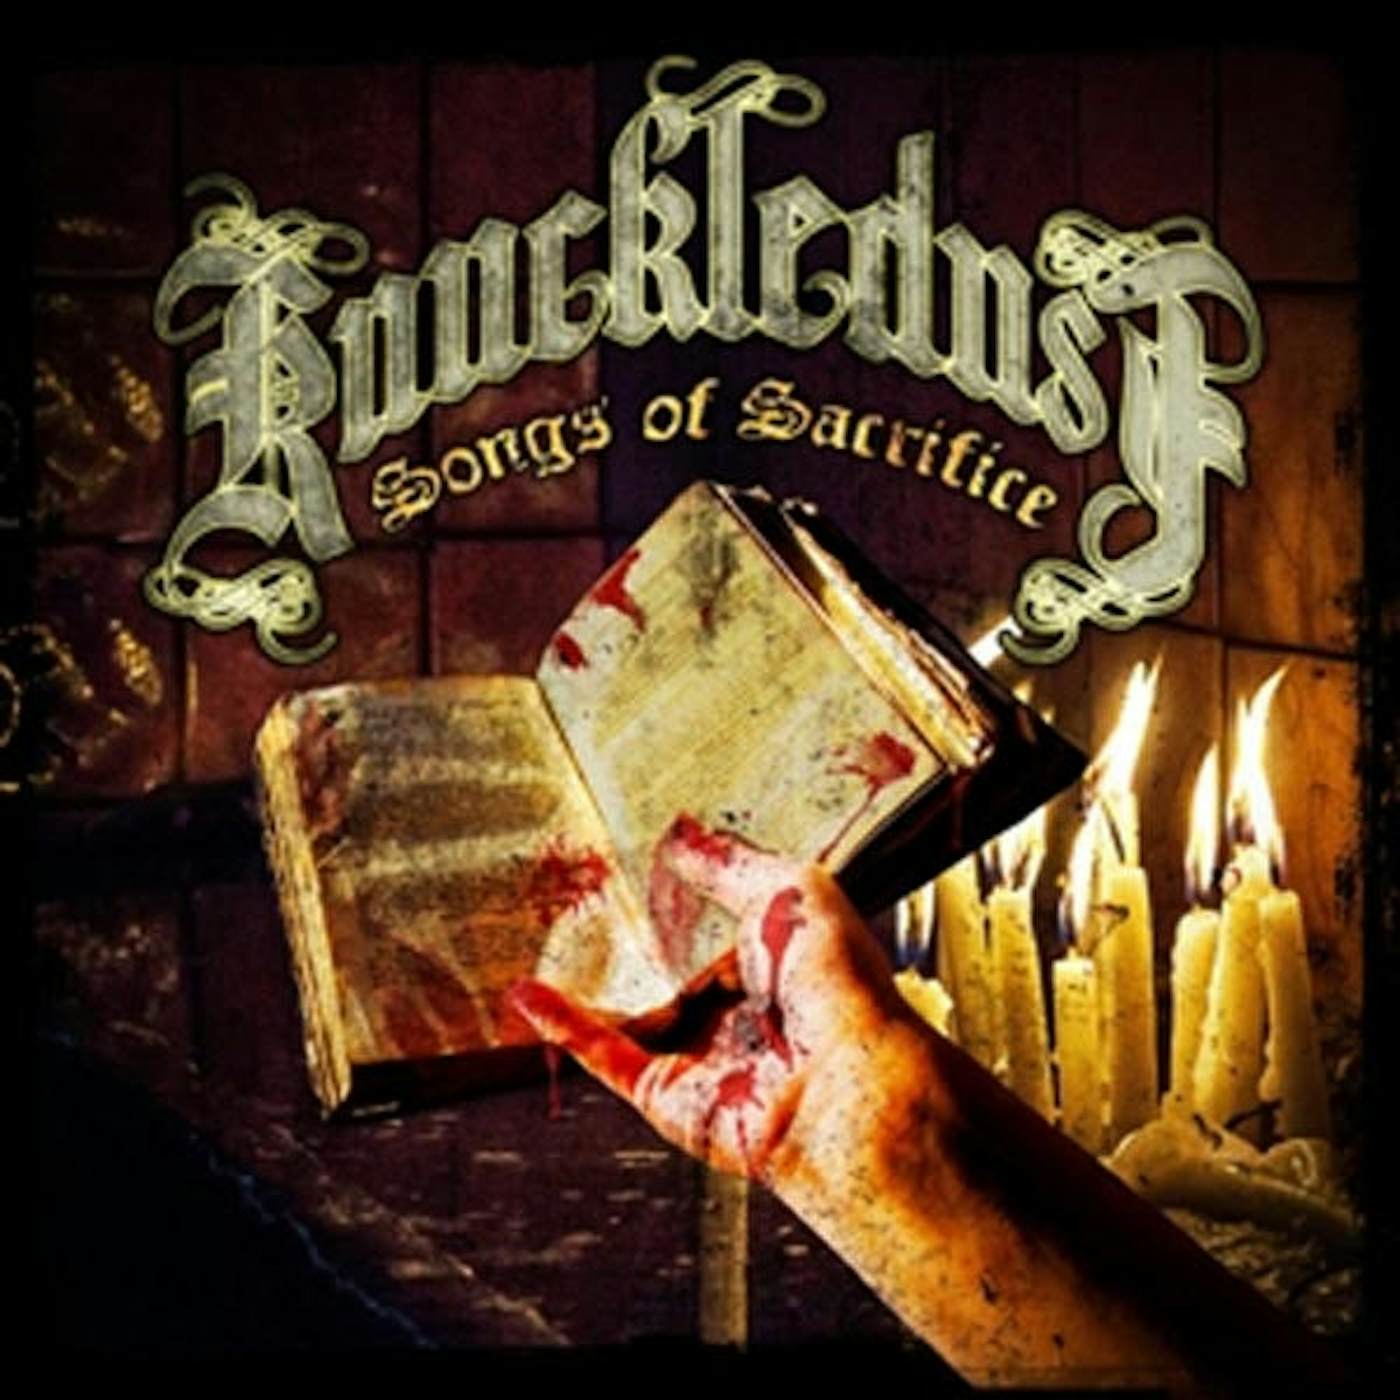 Knuckledust LP - Songs Of Sacrifice(Ltd Gold Vinyl)